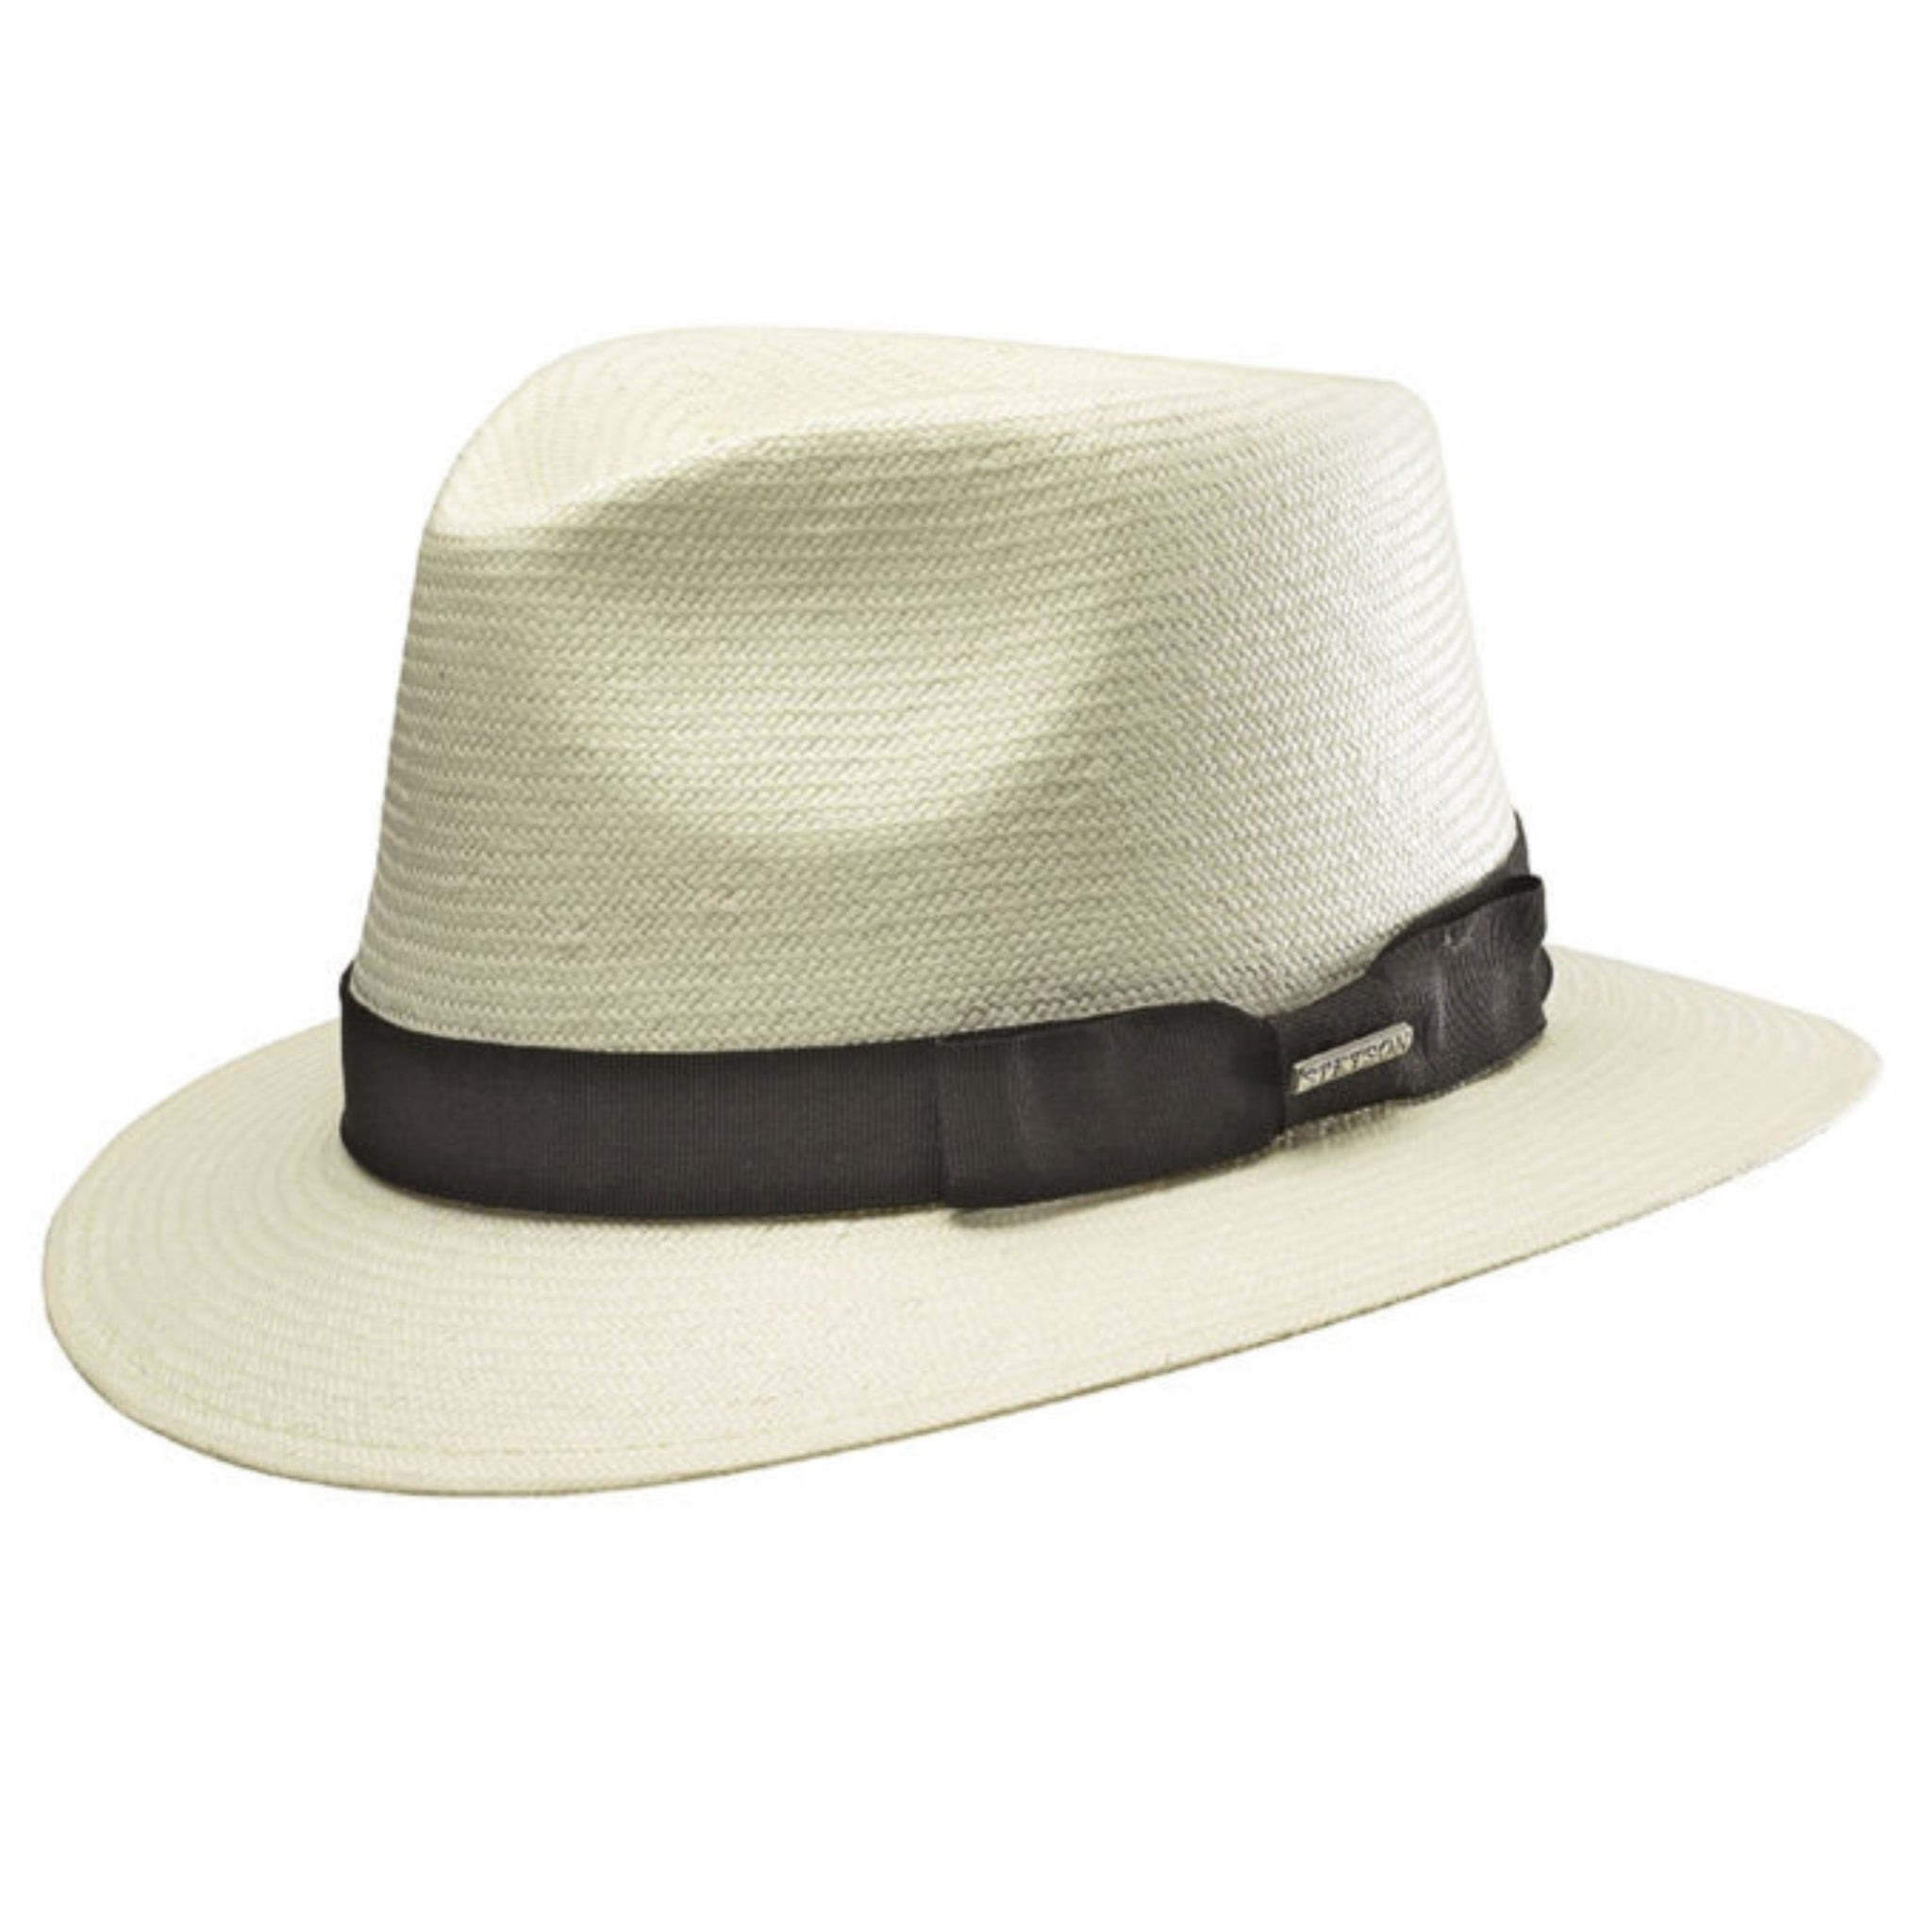 The Hat Shop Stetson Traveller Toyo Panama Hat